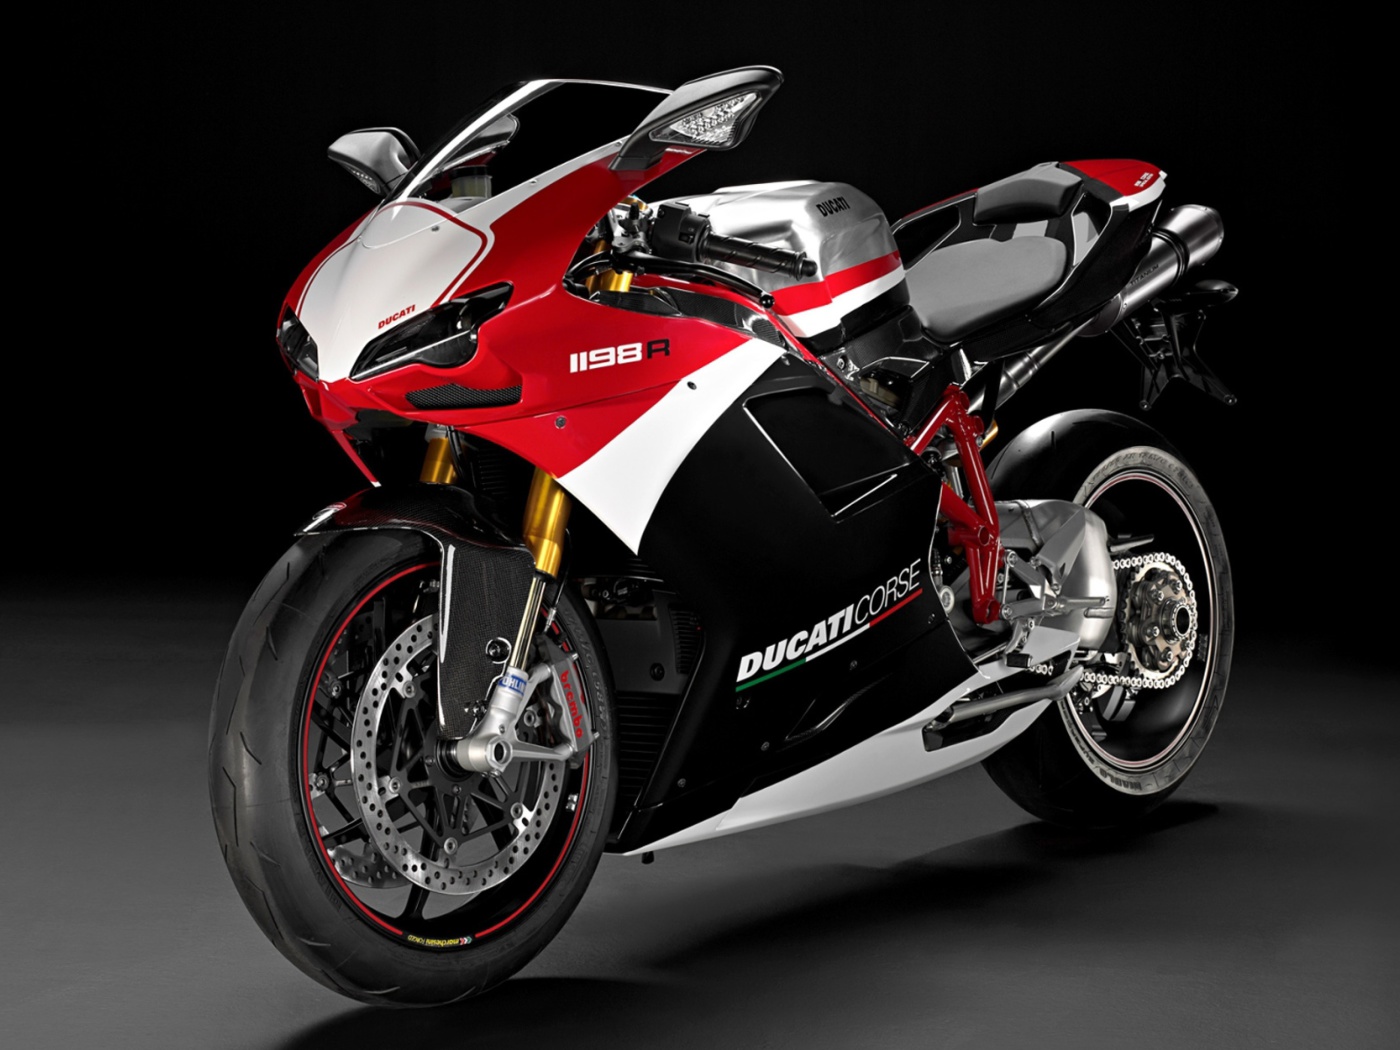 Das Superbike Ducati 1198 R Wallpaper 1400x1050